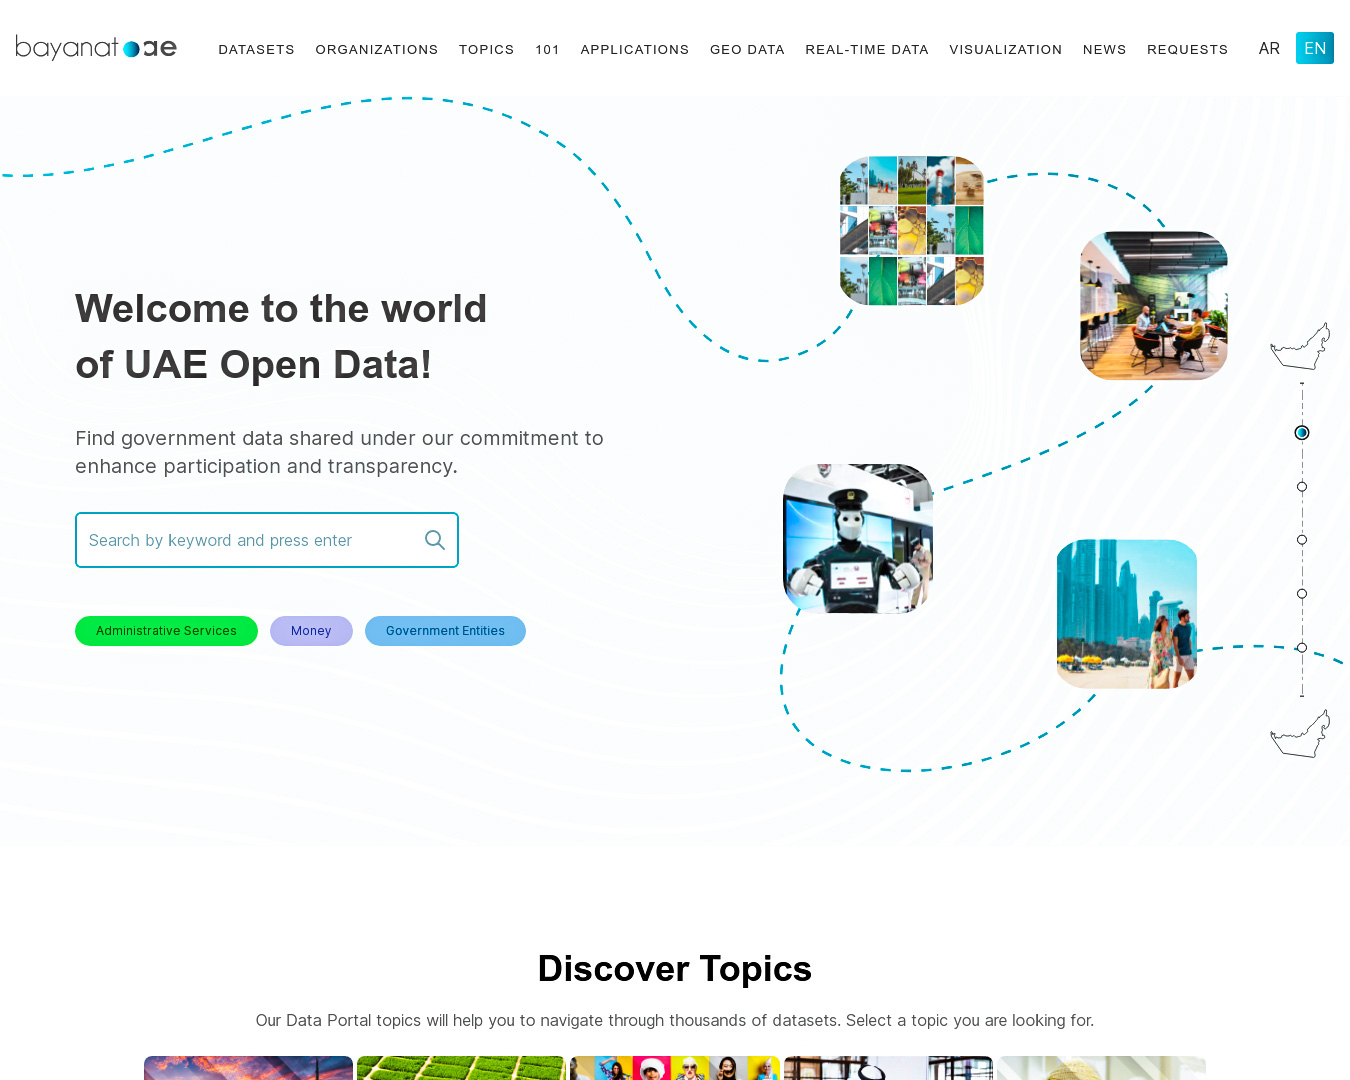 Data Portal Image